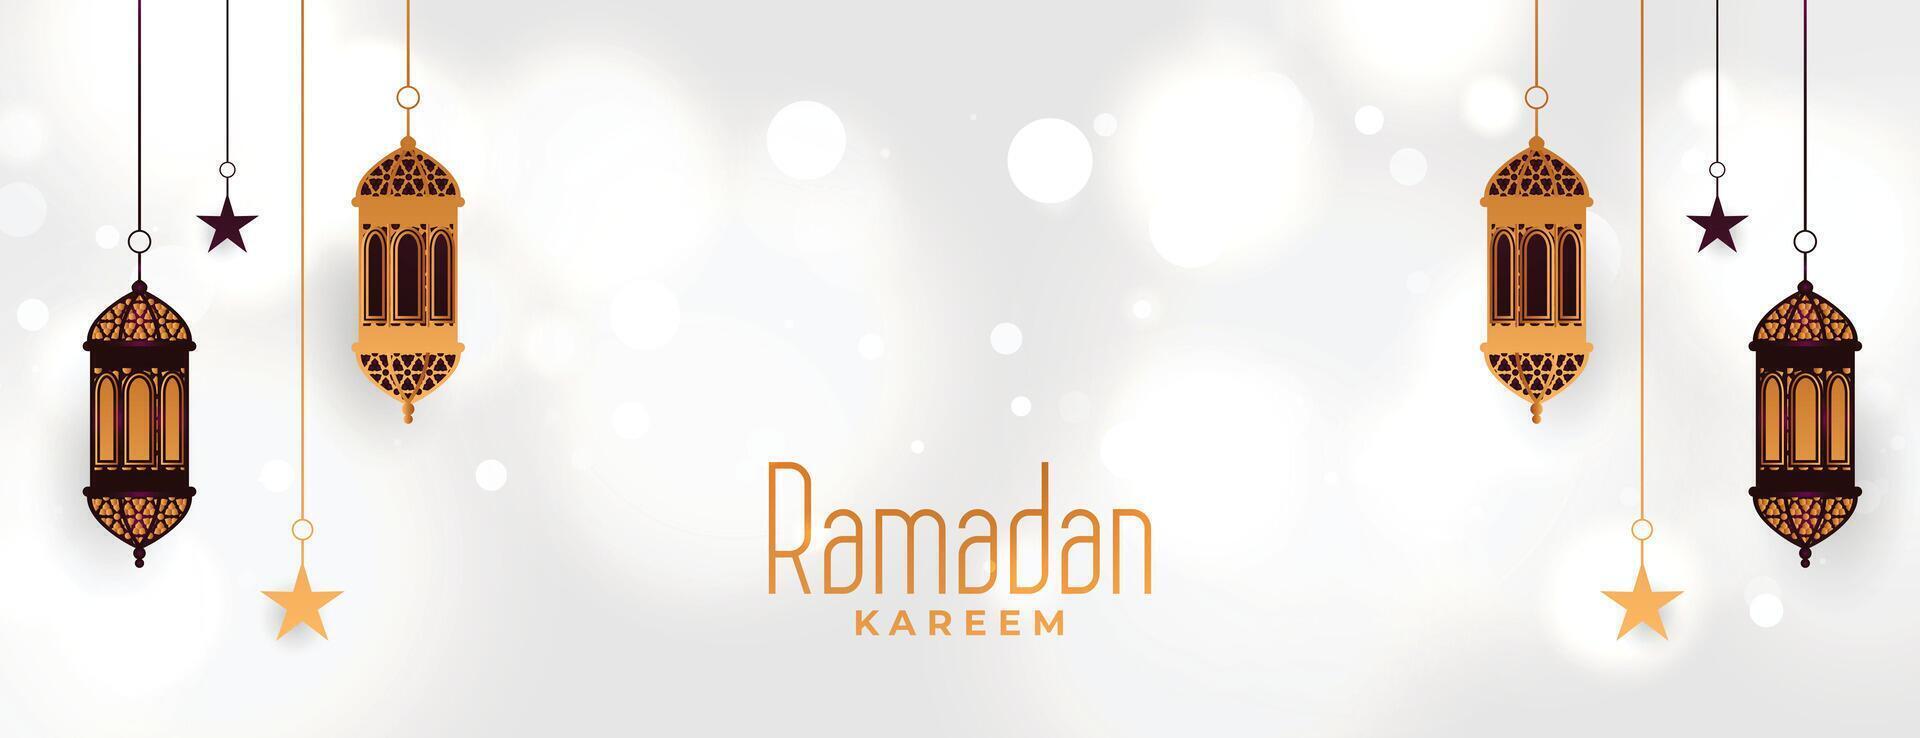 decorativo Ramadã kareem eid festival bandeira Projeto vetor